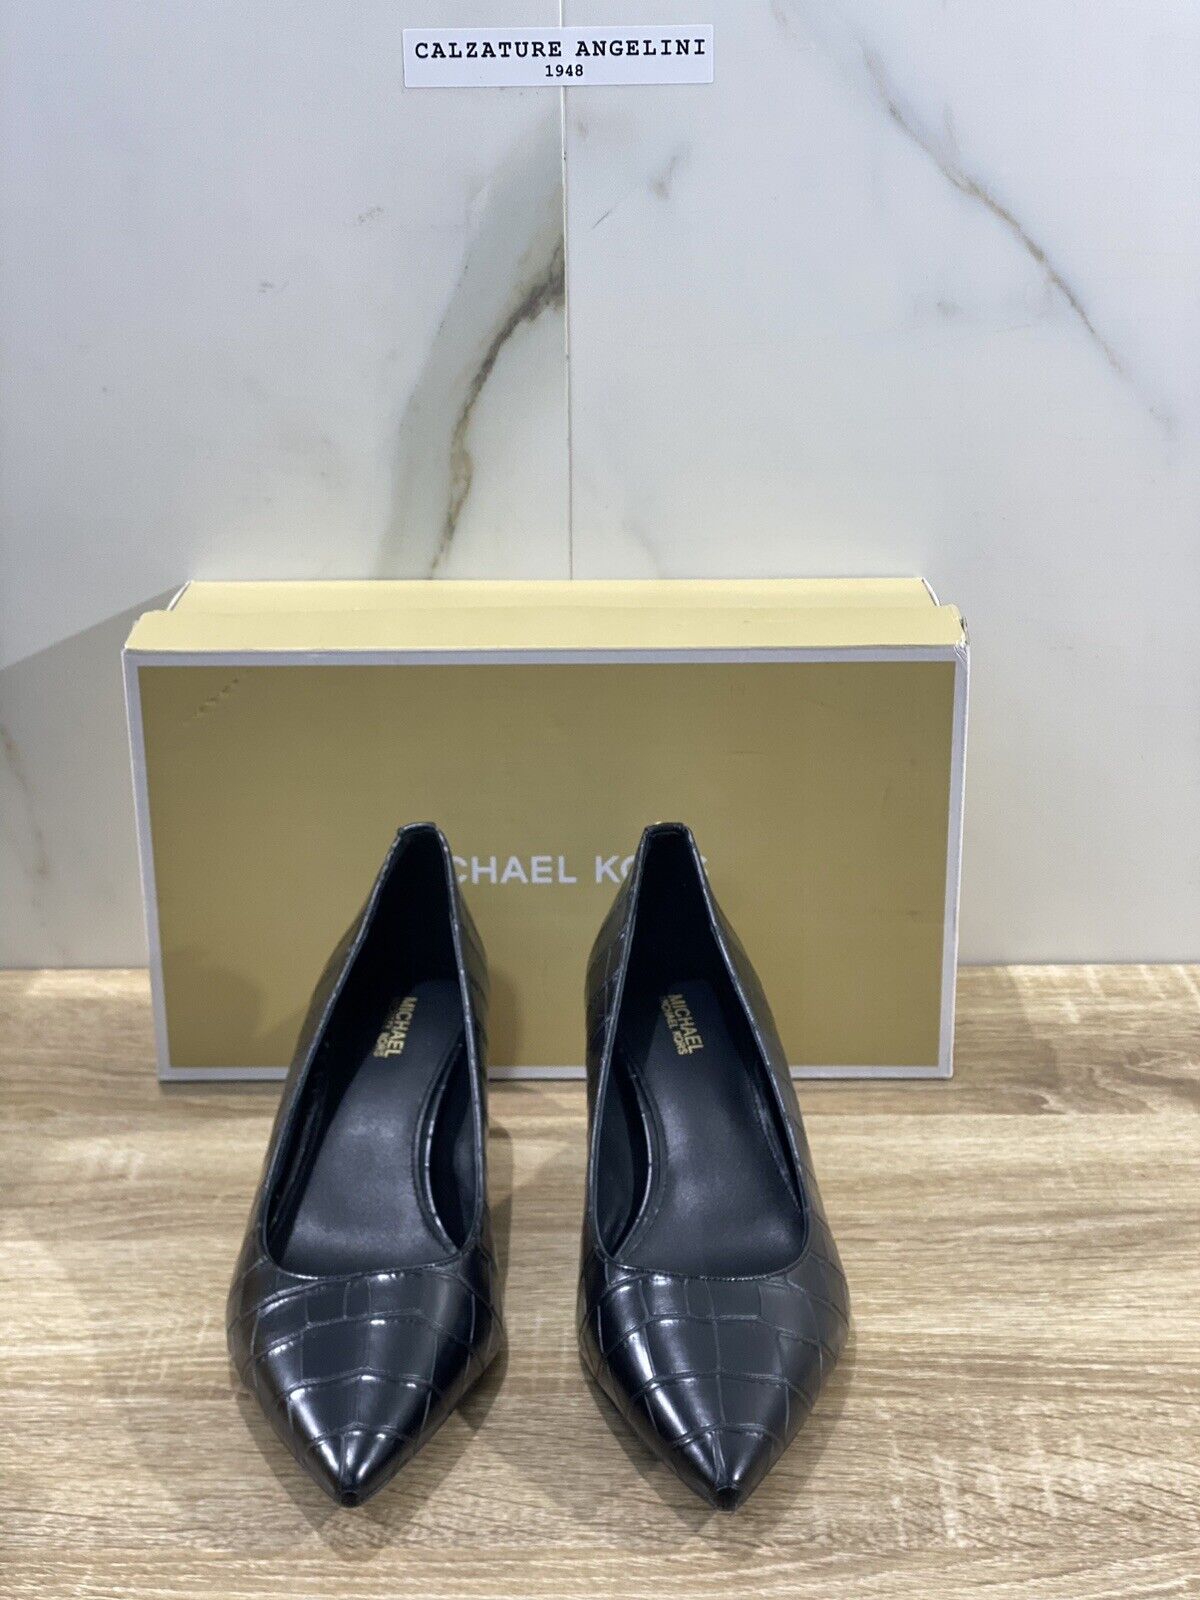 Michael Kors scarpa donna Sara flex pump pelle nera con tacco 38.5